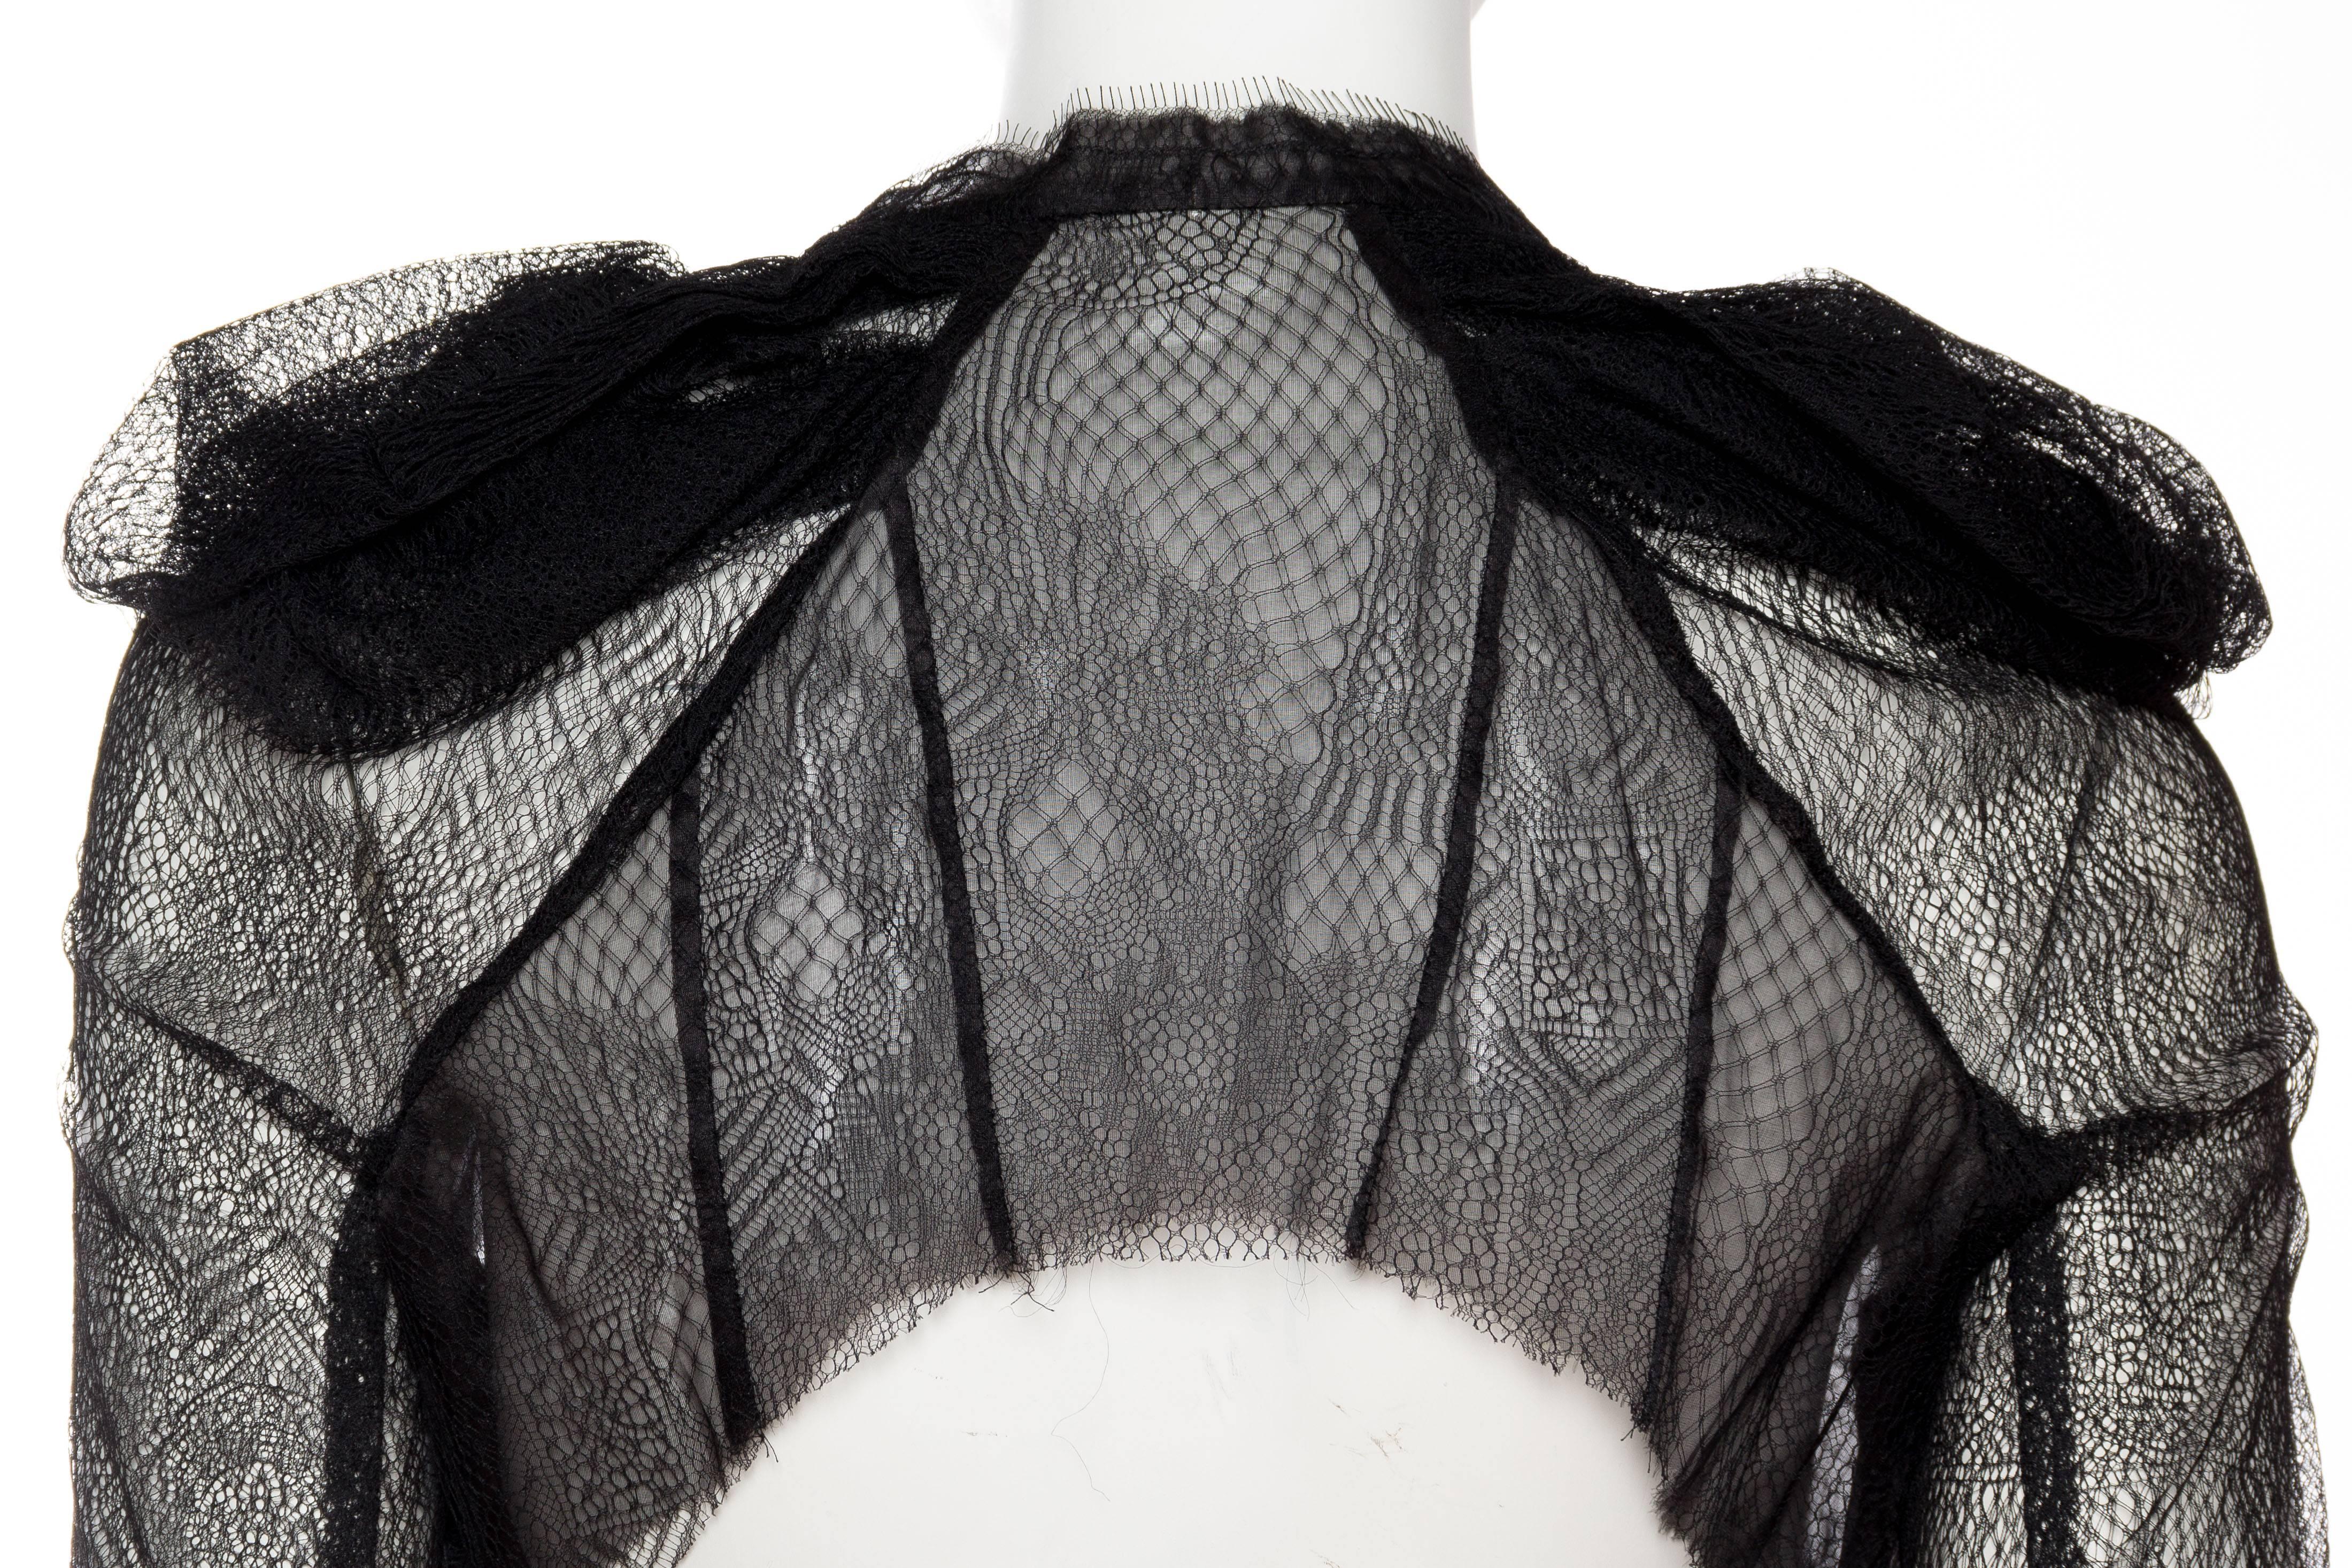 Women's Silk and Lace Deconstructed Bolero Shrug by Sharon Wauchob